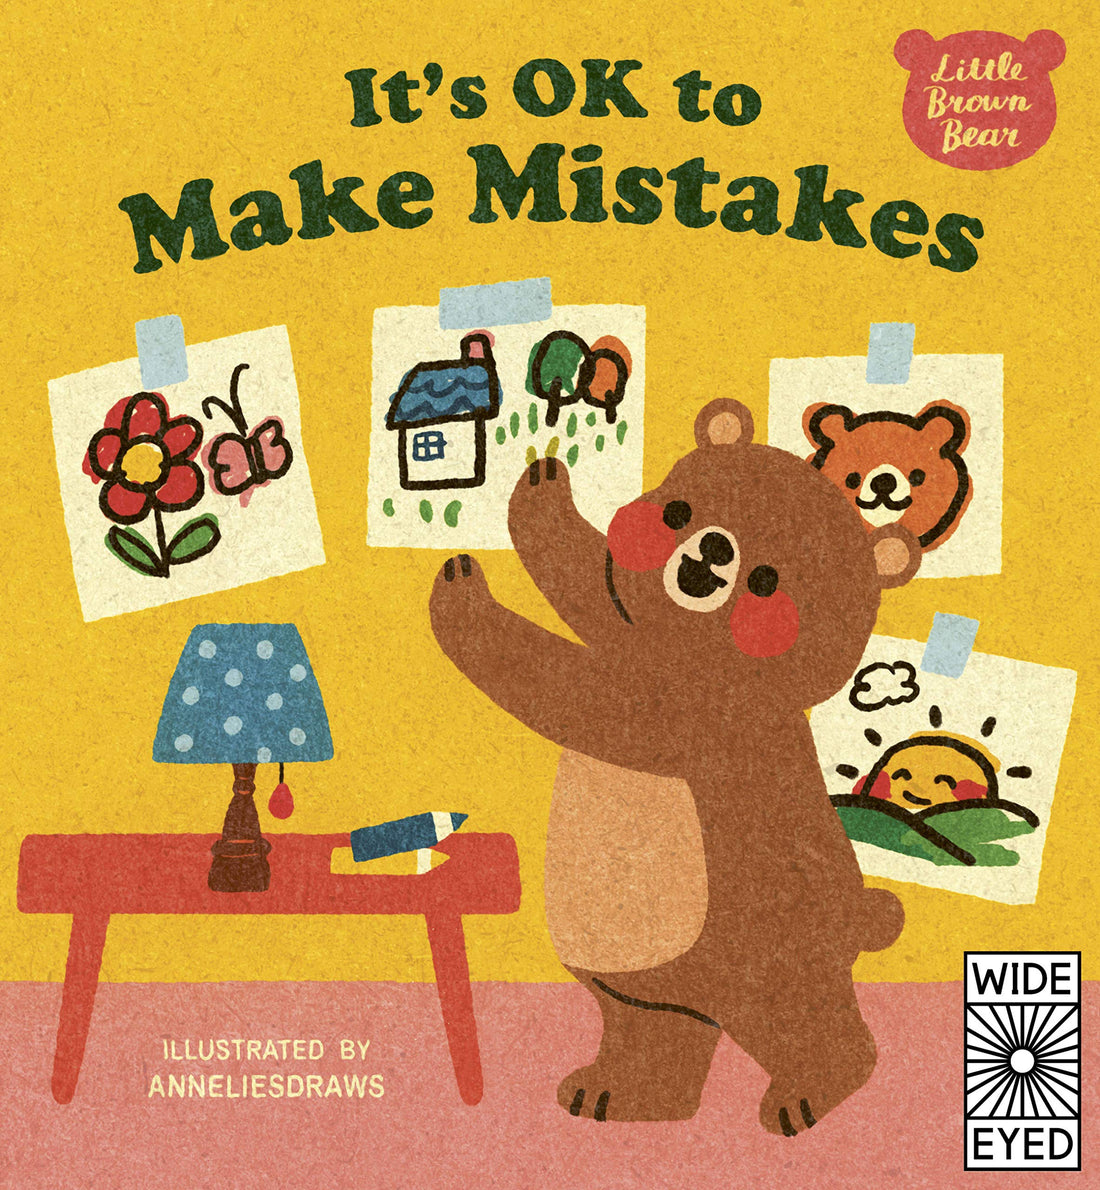 It's OK to Make Mistakes - Parkette.